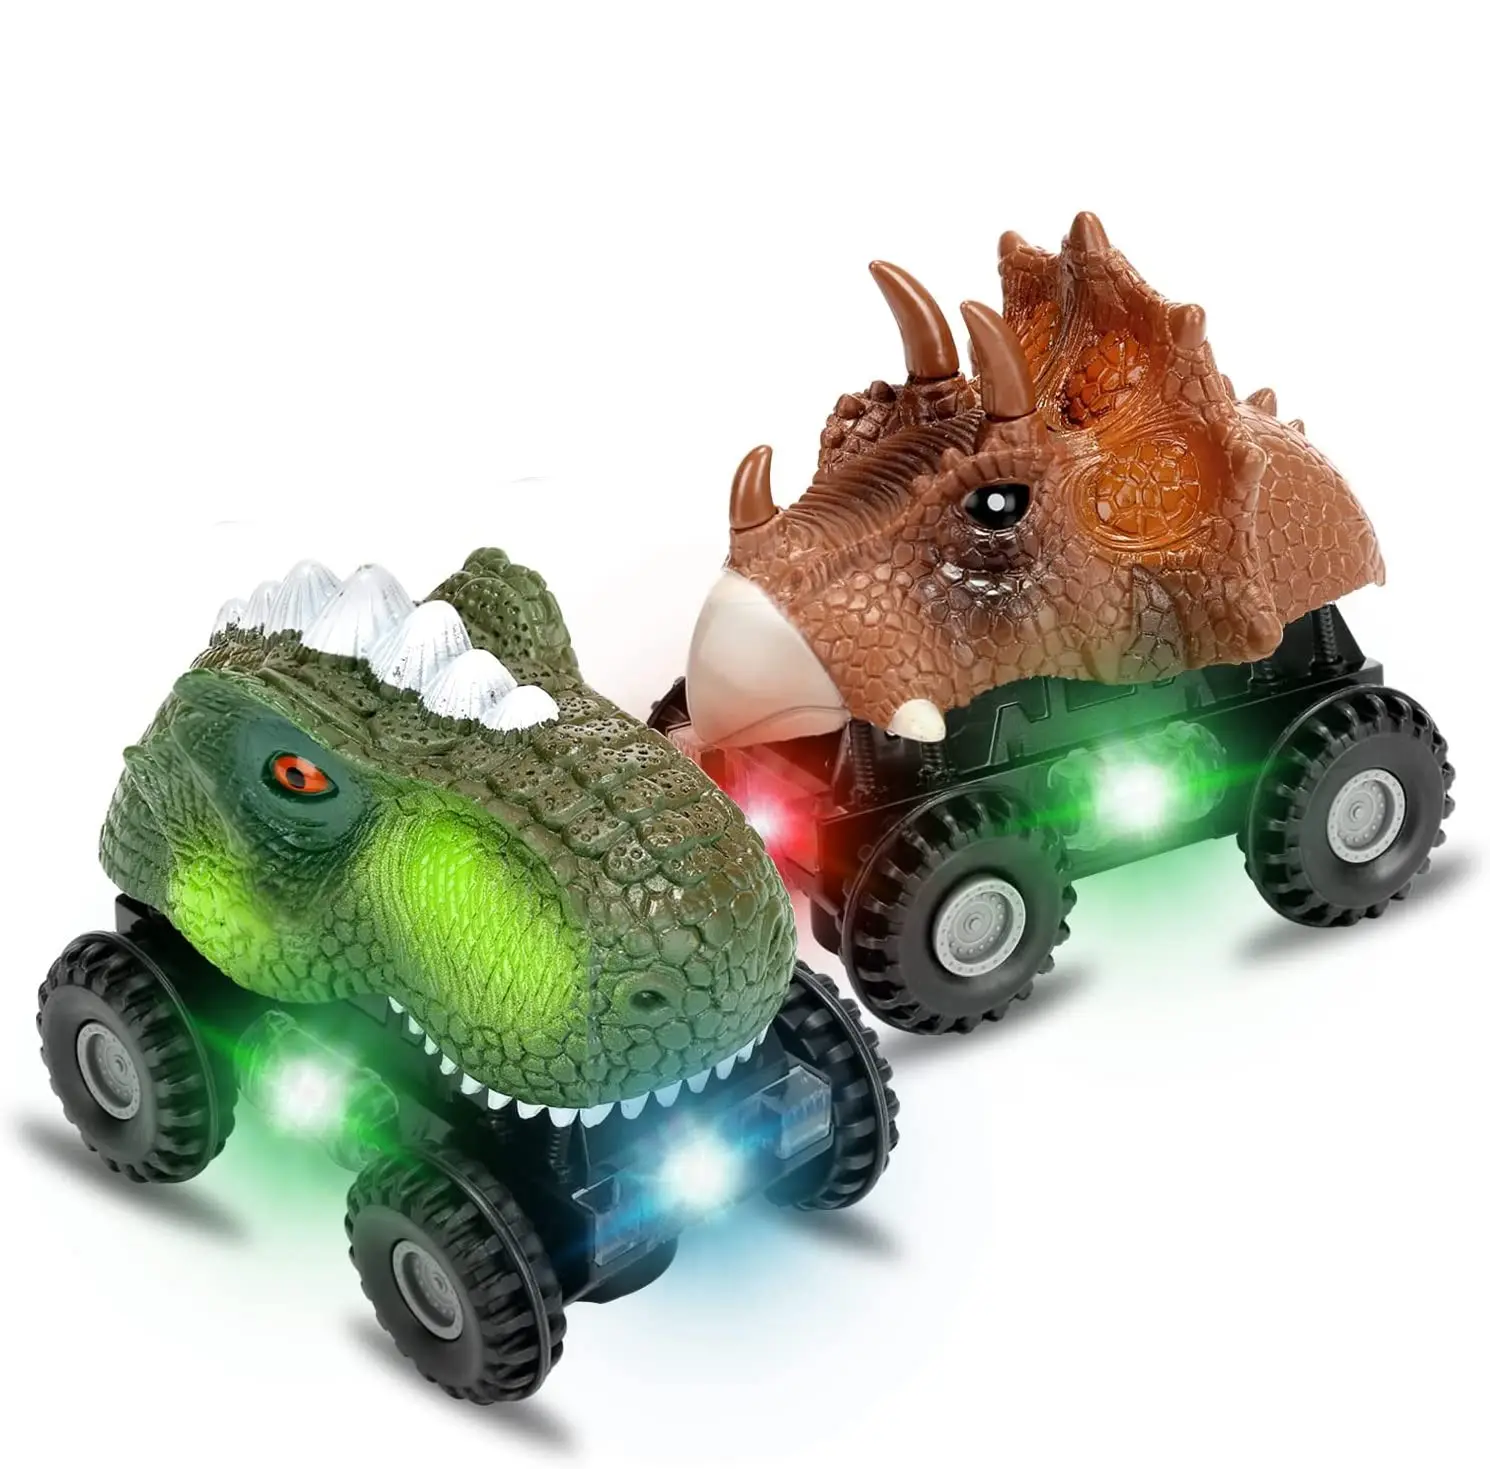 New Led Light Sound Dinosaur Model Mini Toy Car Dinosaur Toys Gifts For Kids